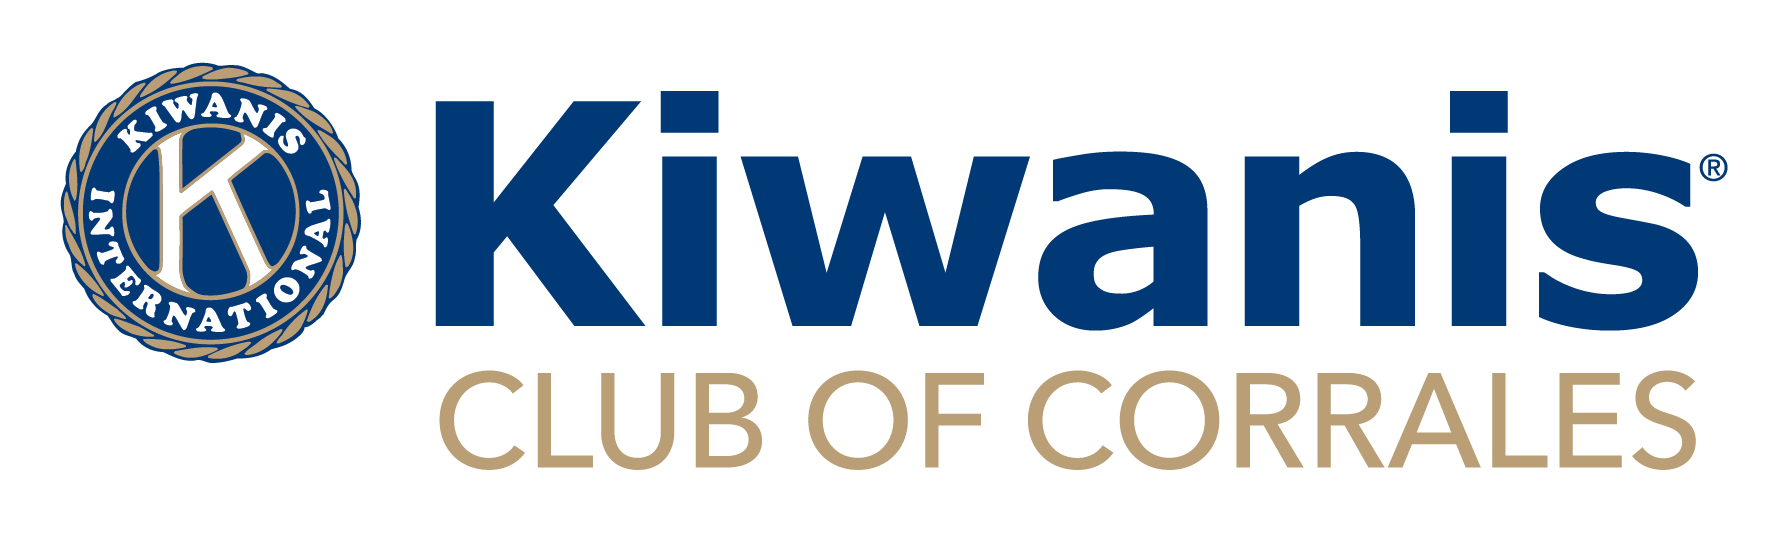 Kiwanis Club of Corrales Logo